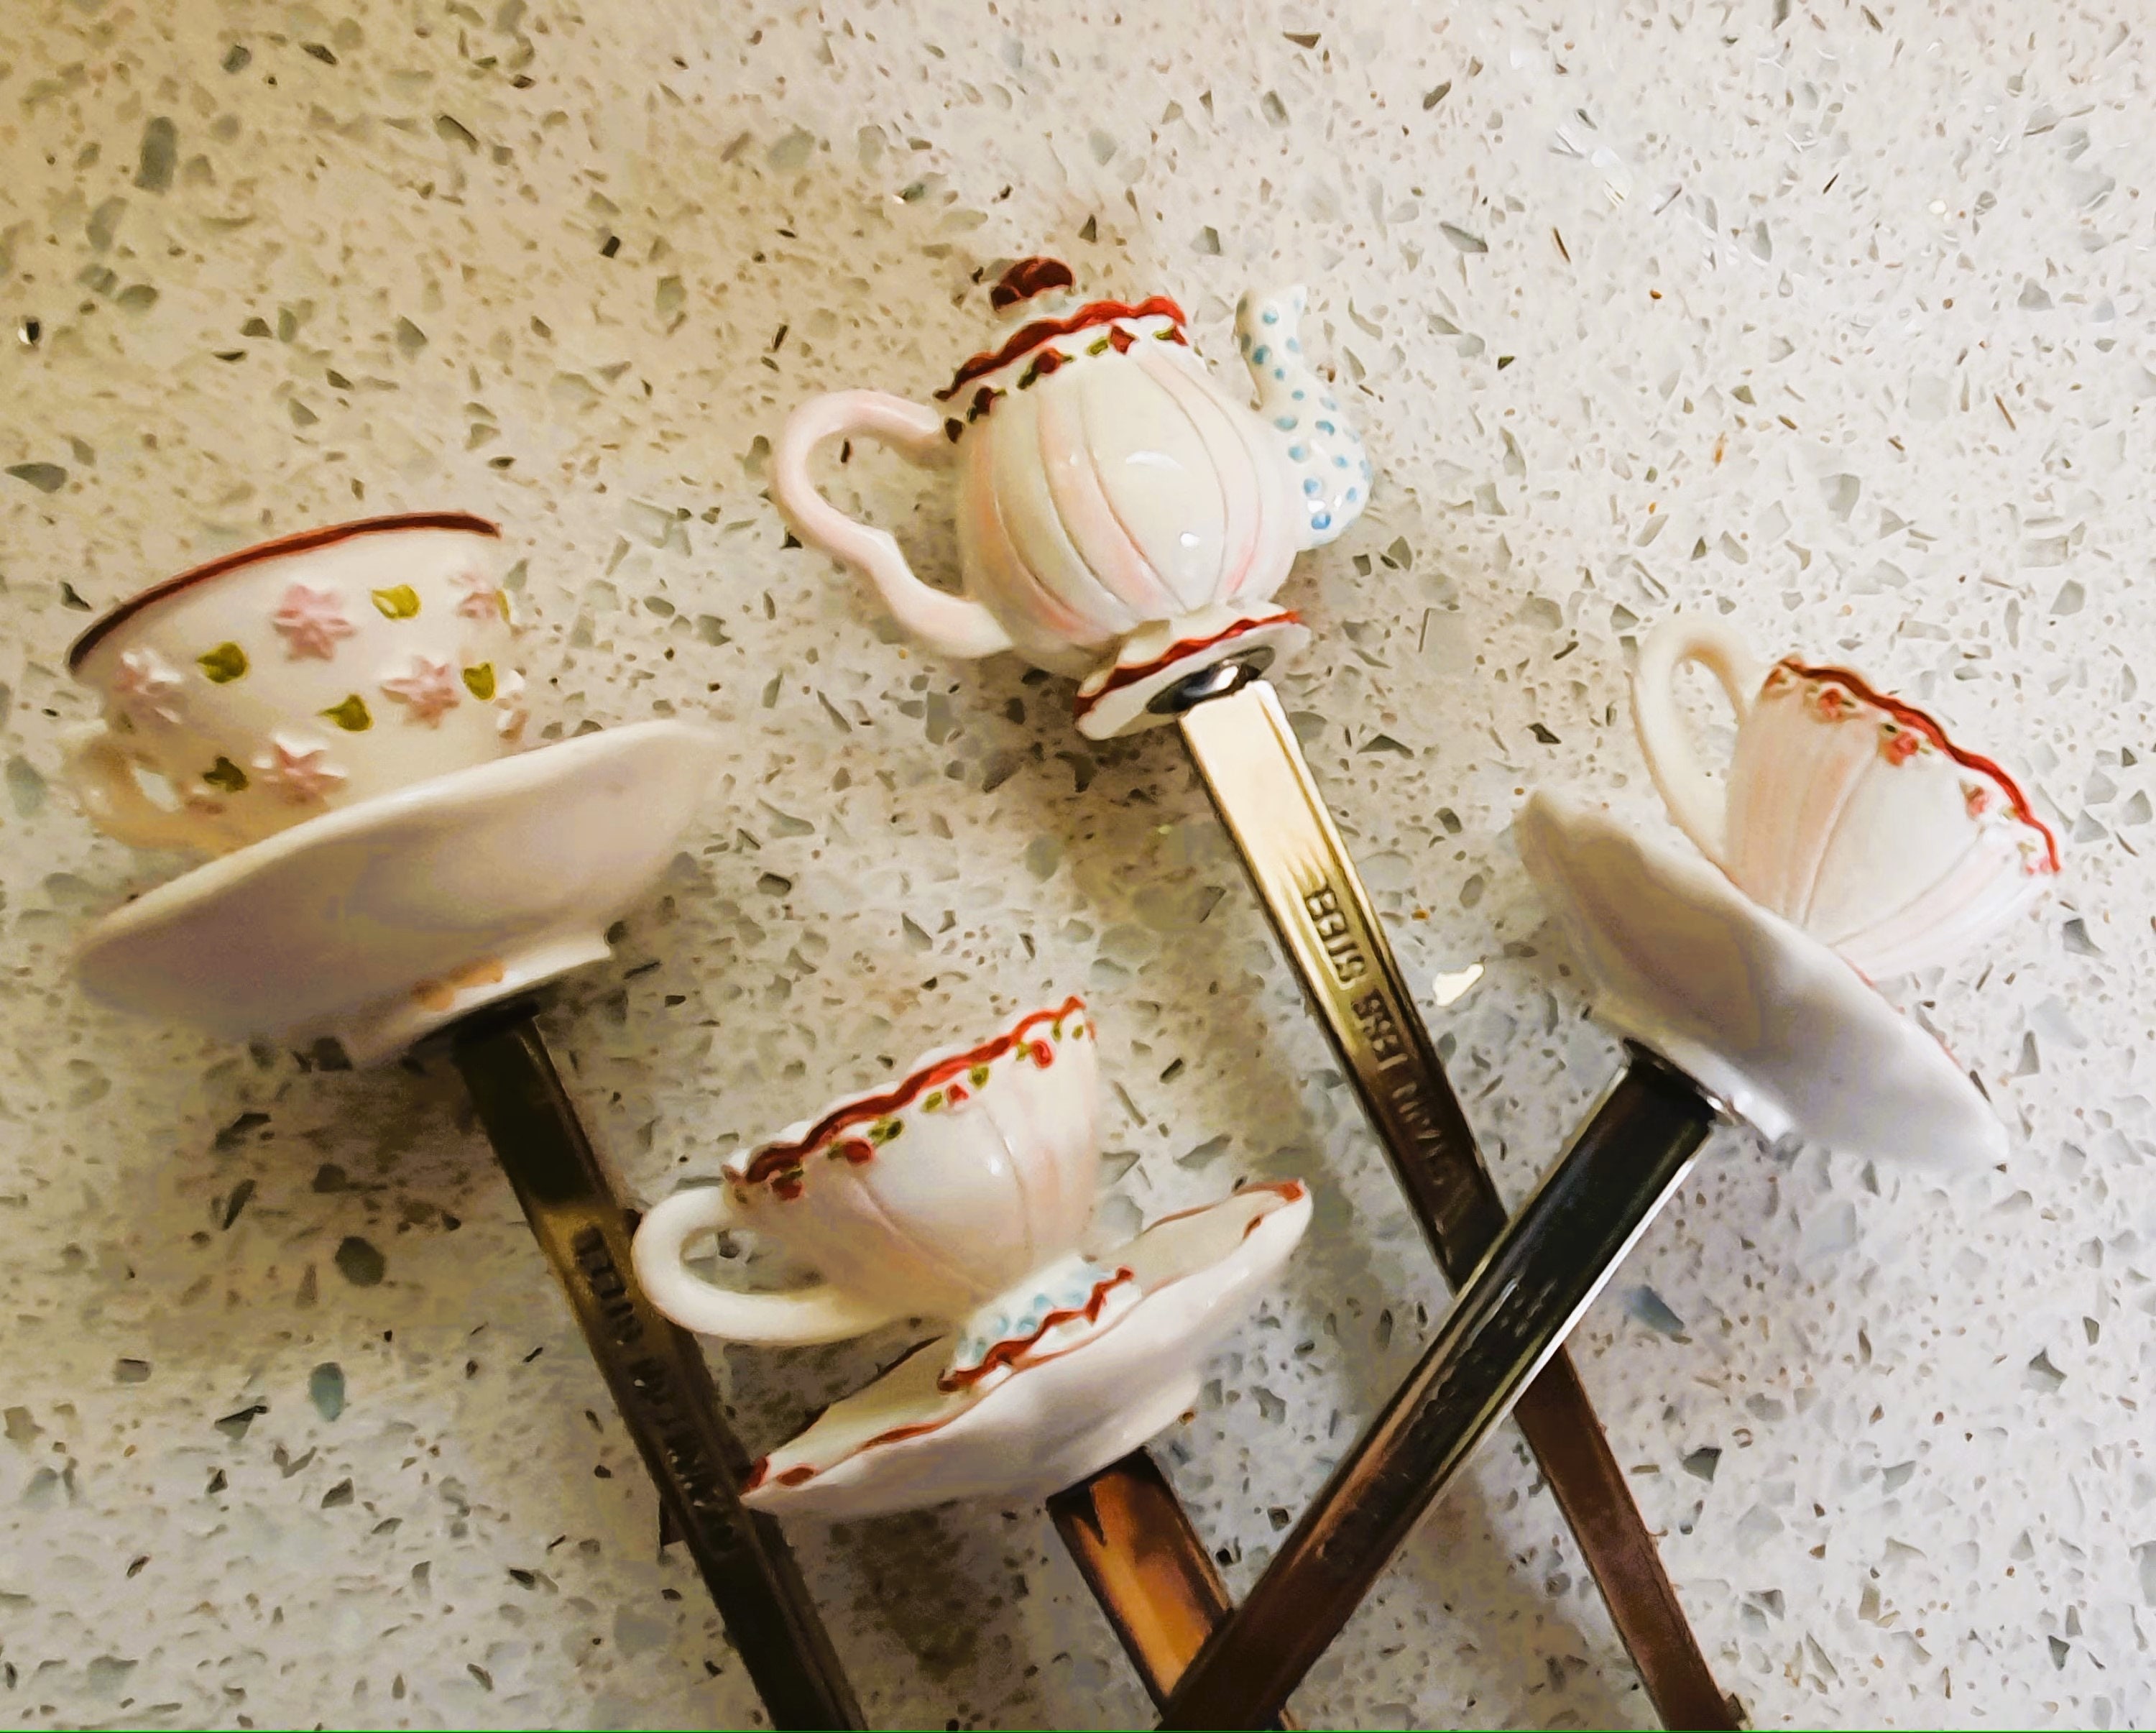 Measuring Spoon for Loose Tea - Humming Cup Premium Organic Tea